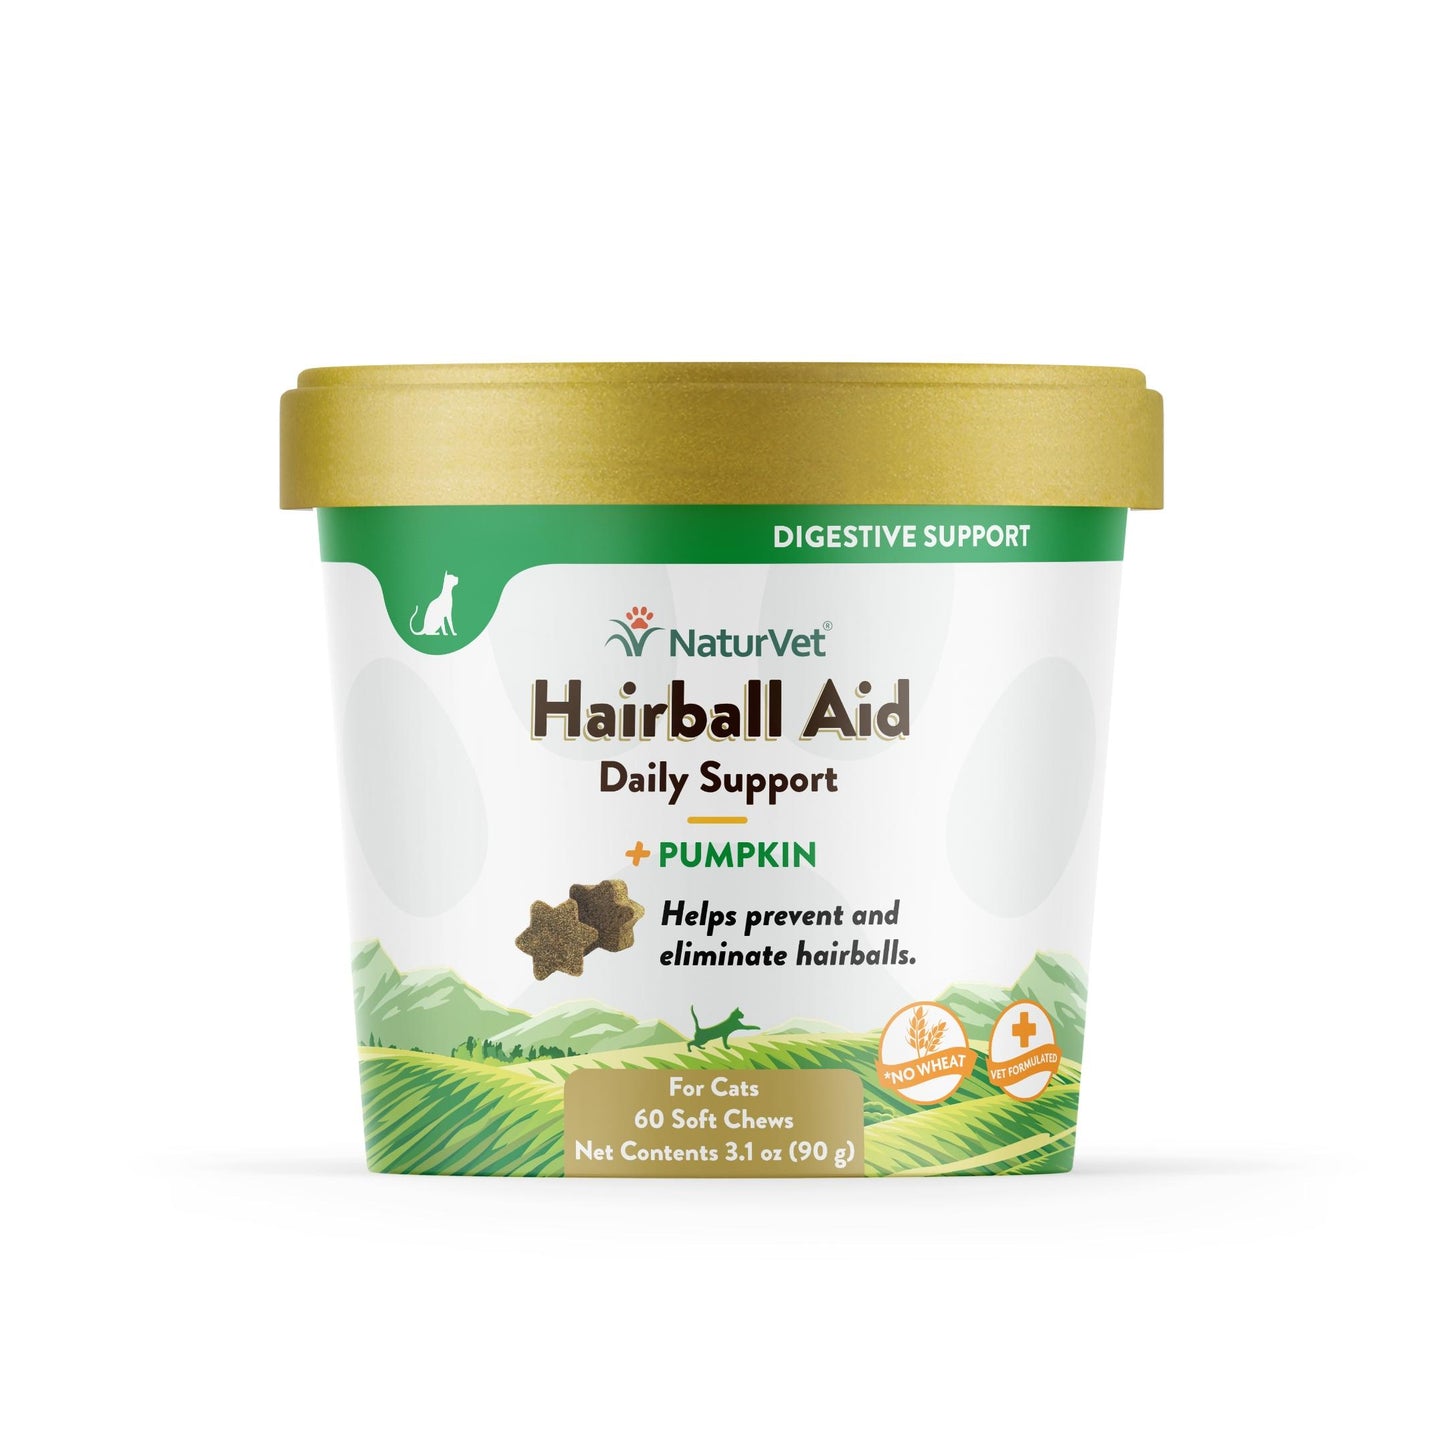 NaturVet Hairball Aid Plus Pumpkin Soft Chews Cat Supplement, 60-count